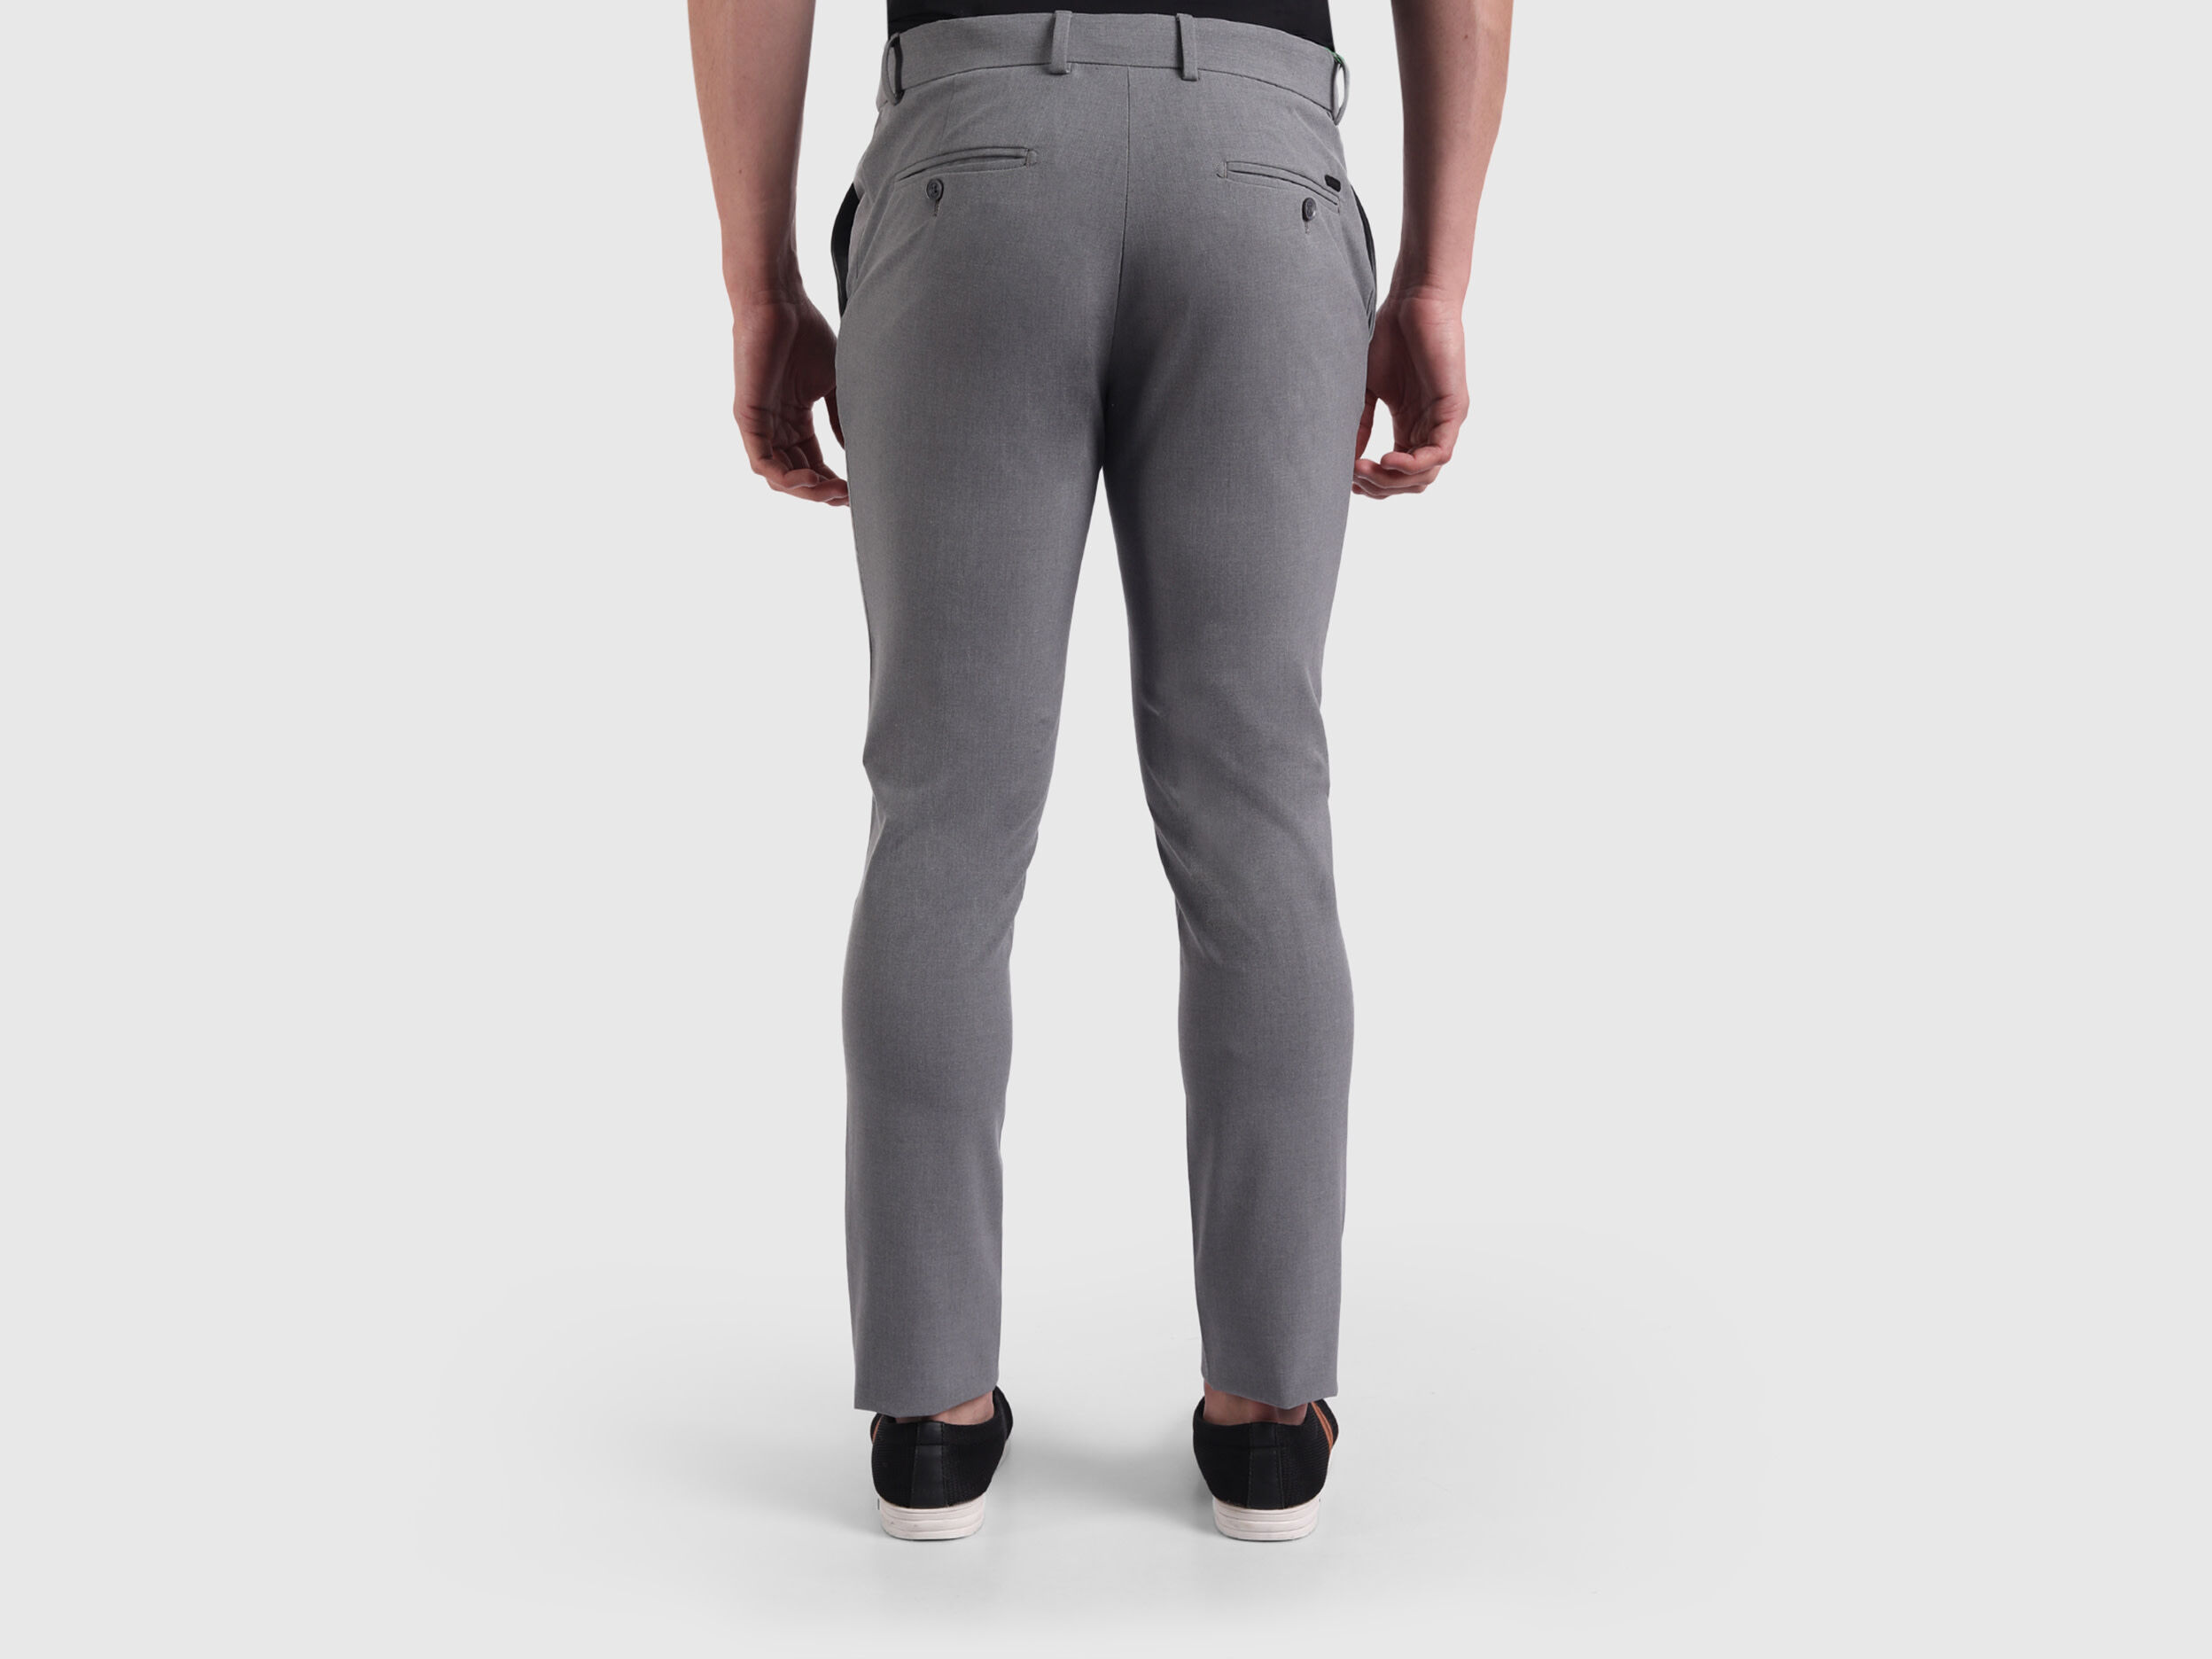 Dusk Grey Flexiwaist trouser  Hem and Stitch